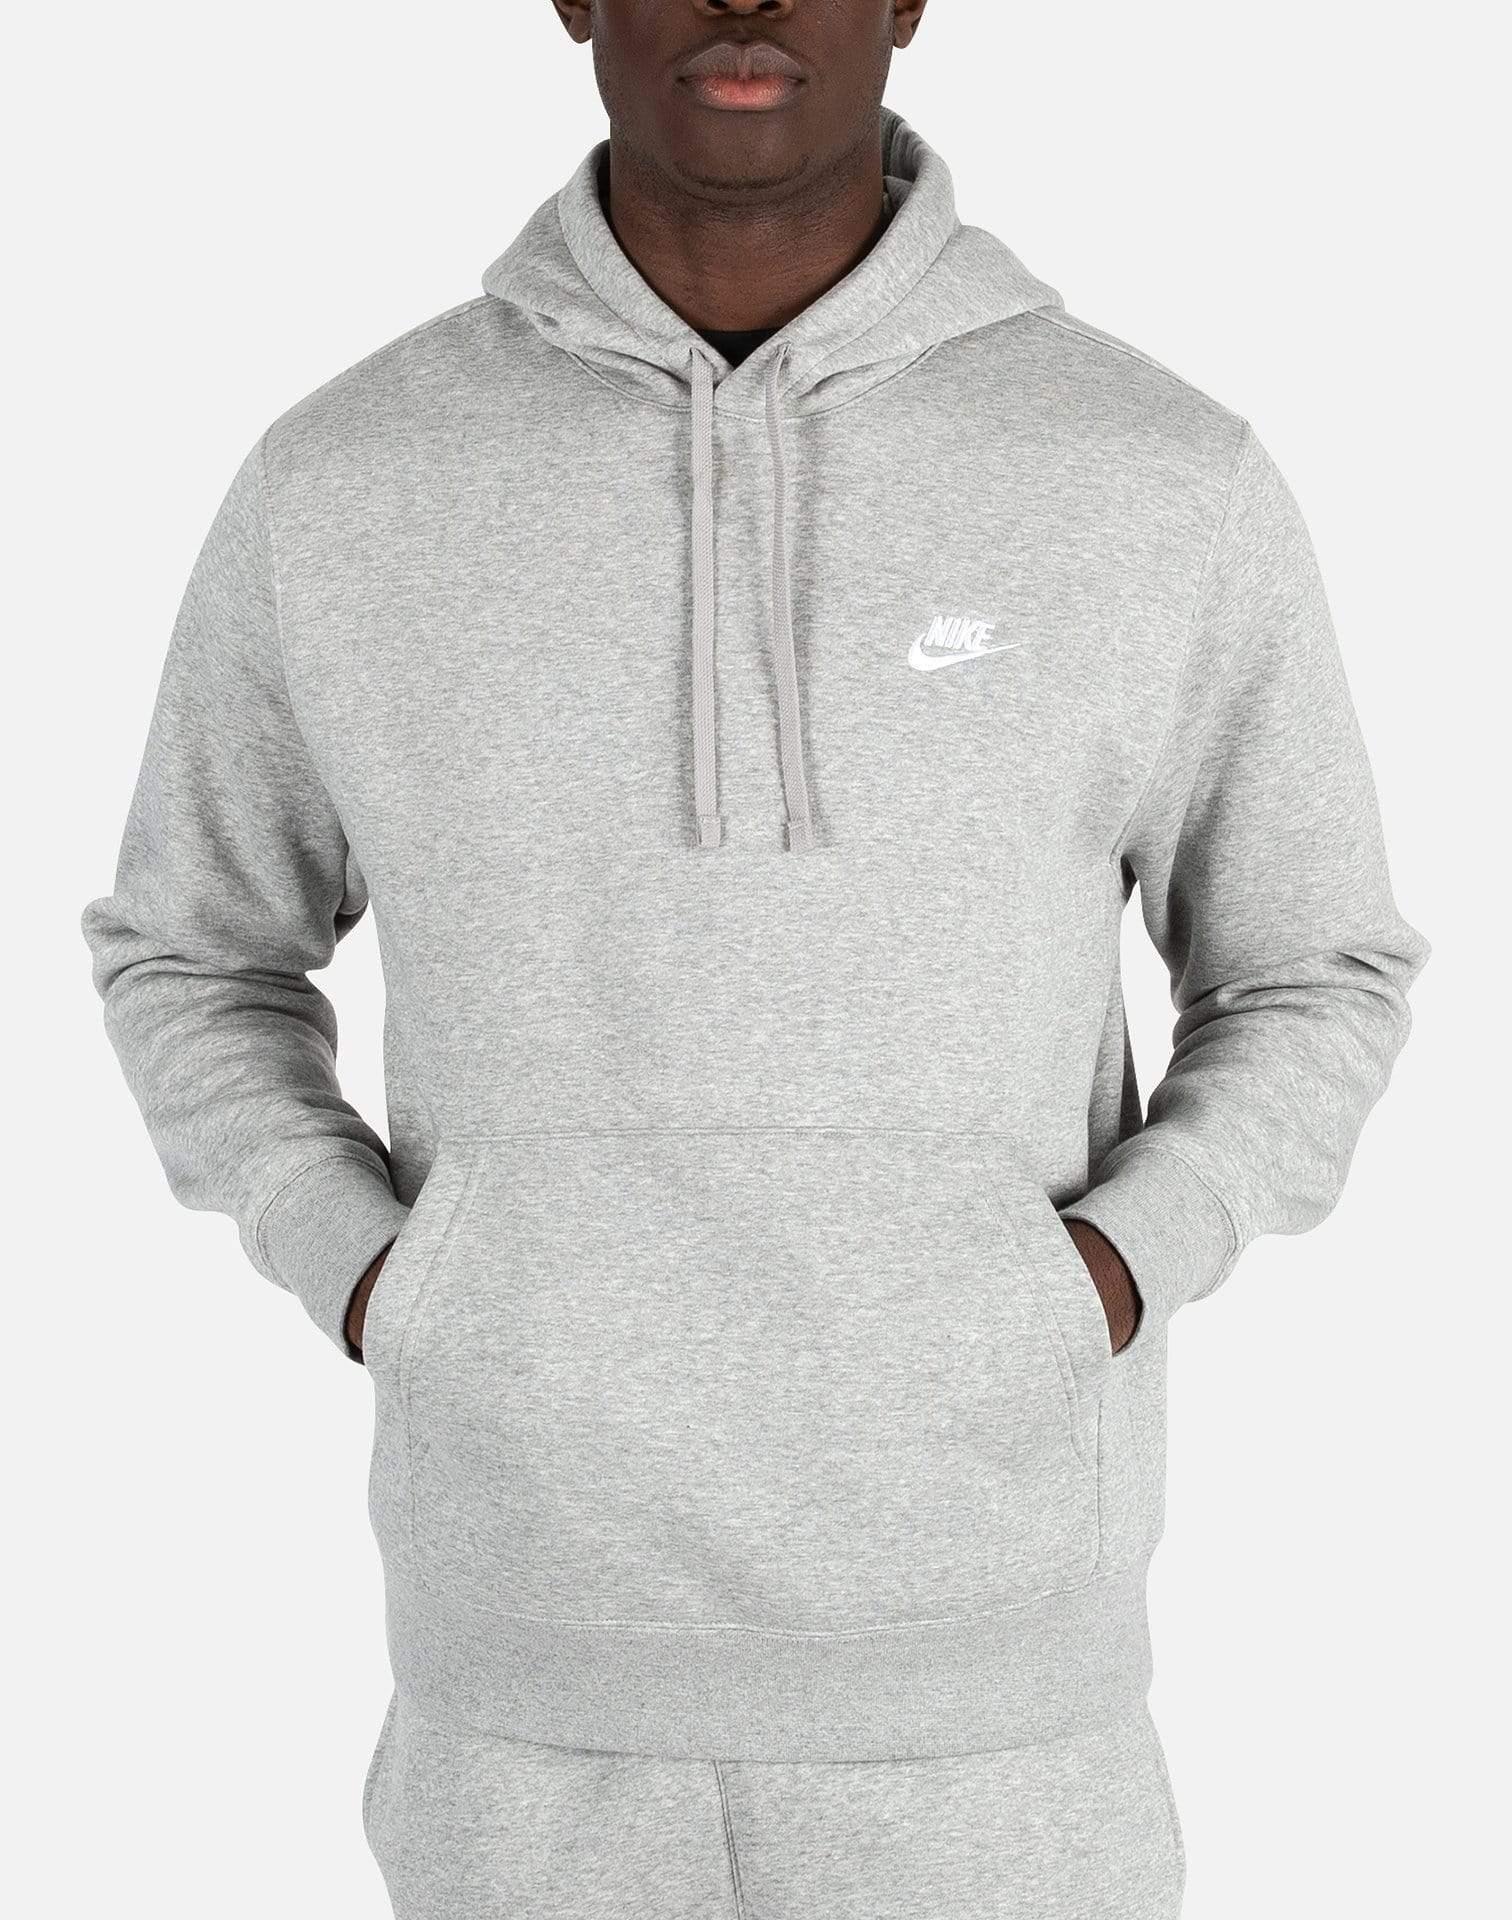 Nike Nsw Club Fleece Pullover Hoodie in Gray for Men - Lyst